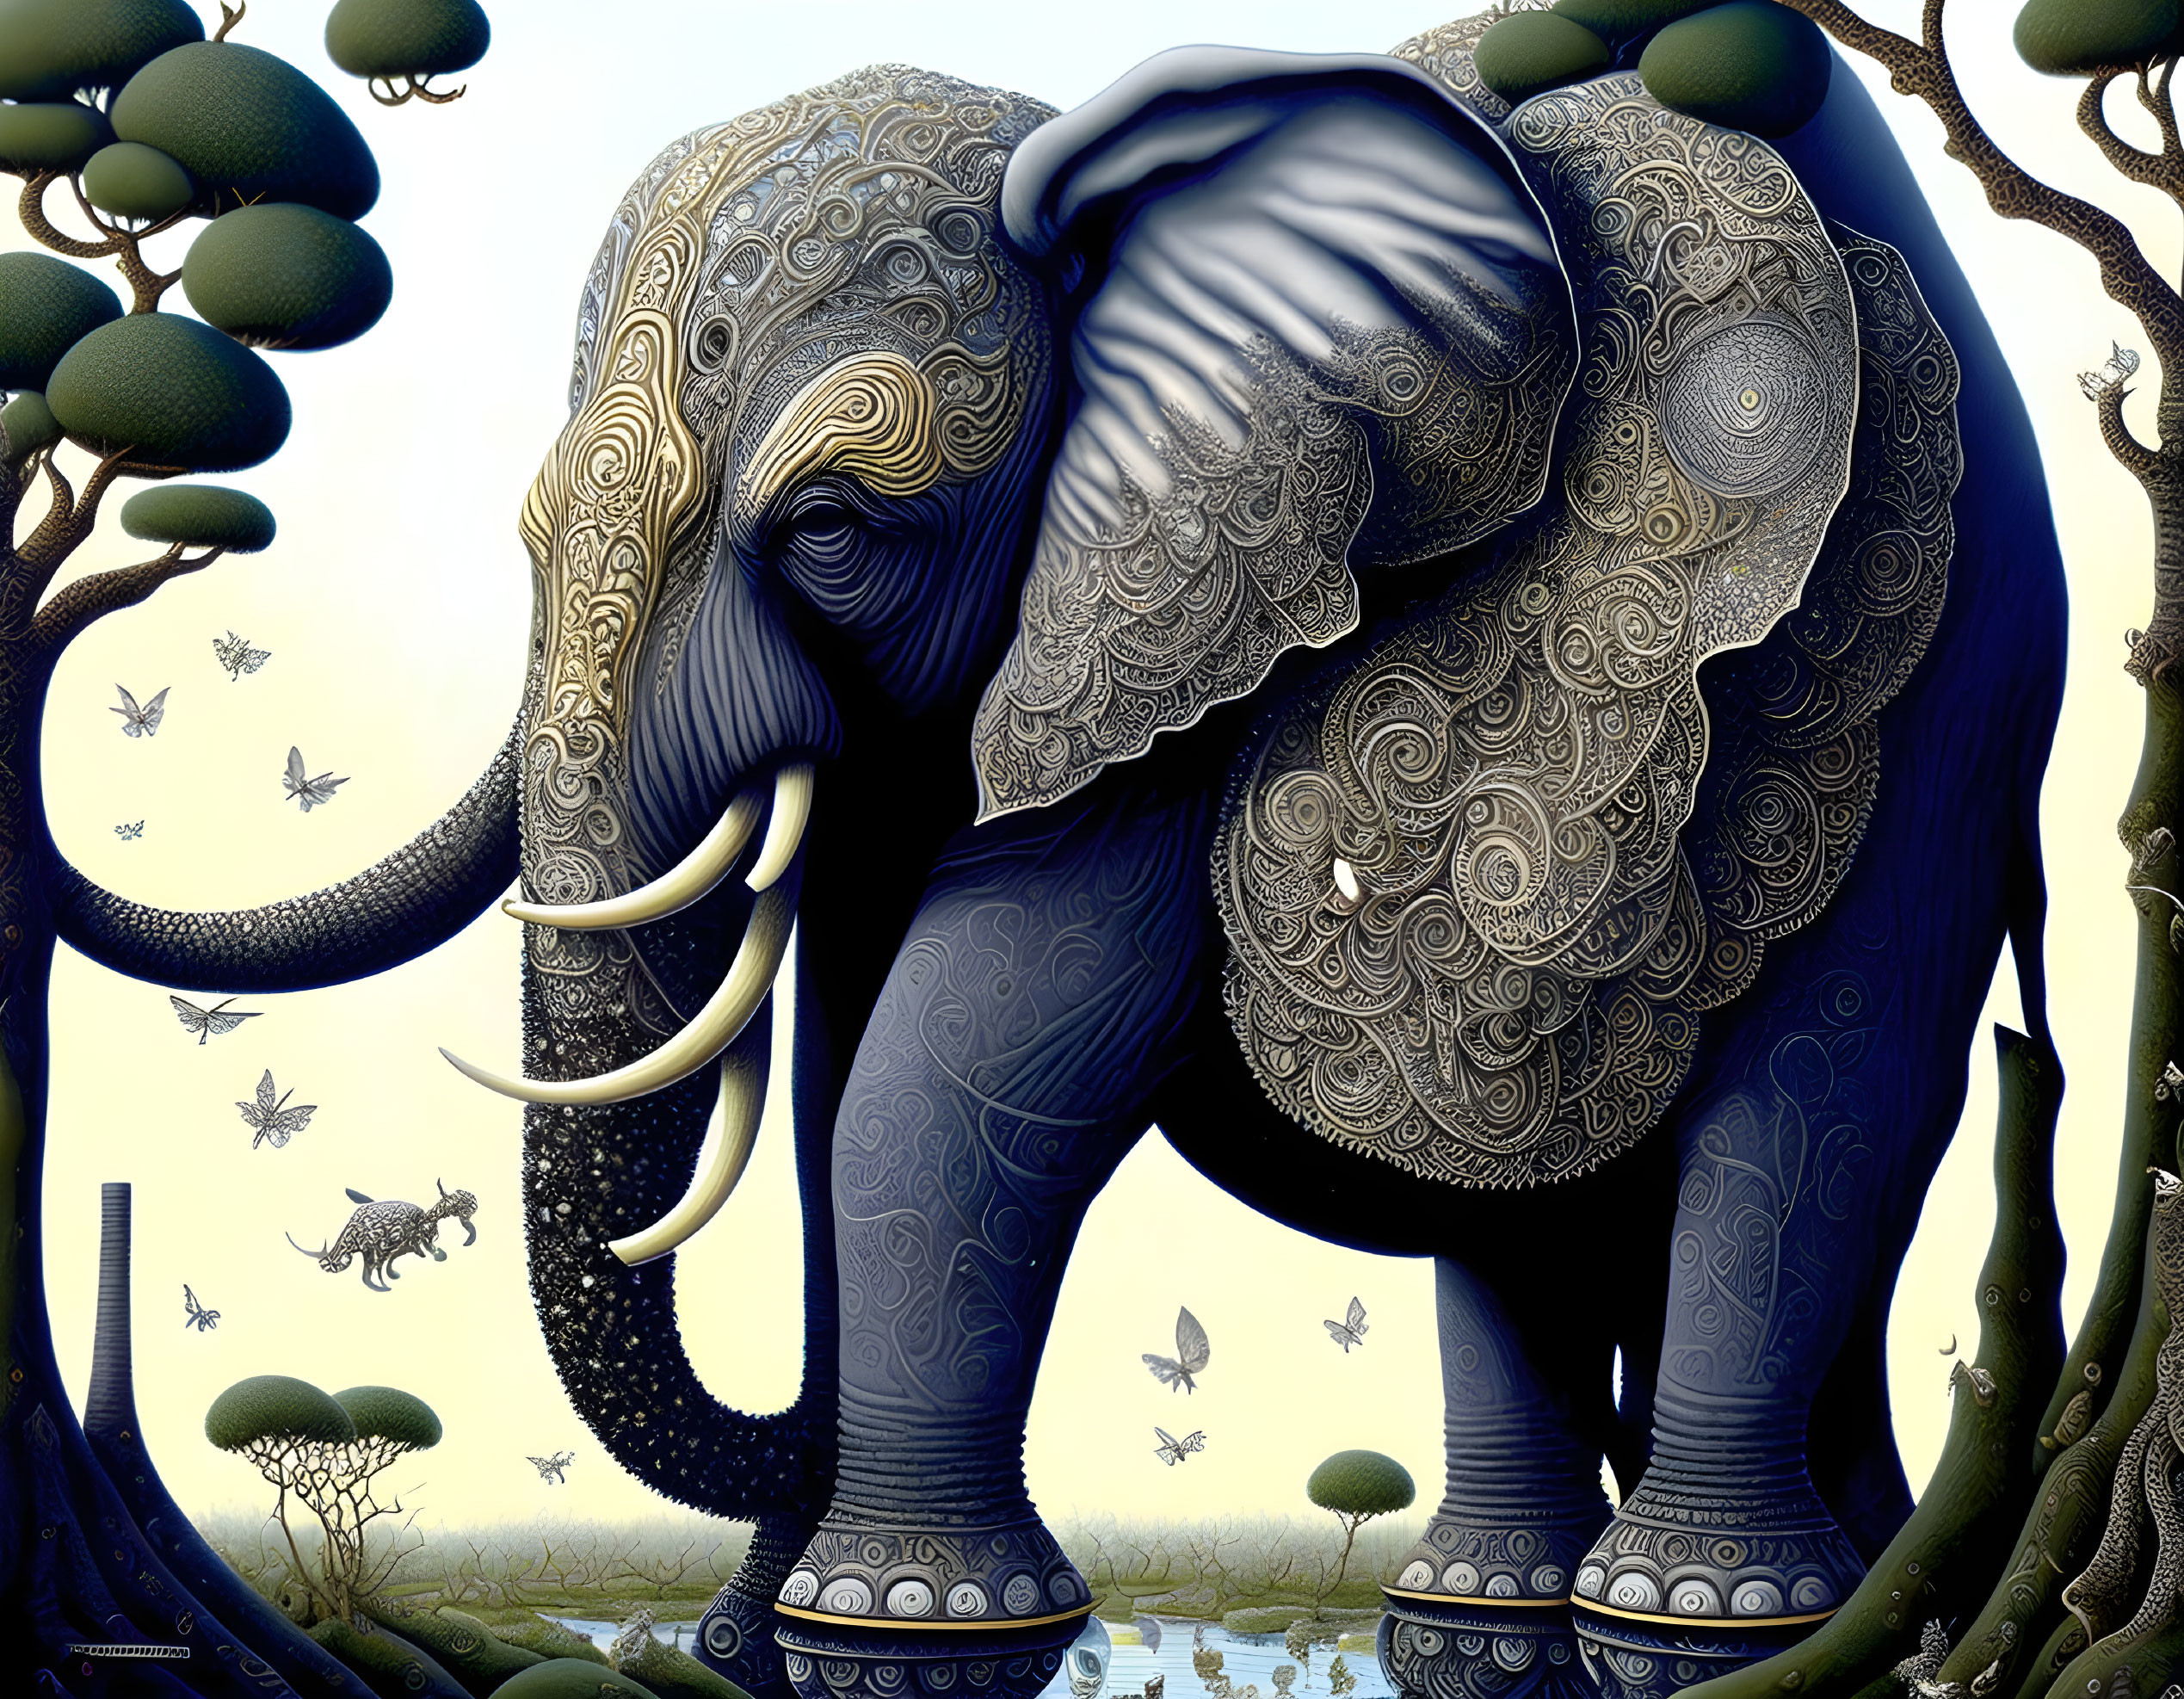 Fantasy biomorphic Striking-White-Black elephant